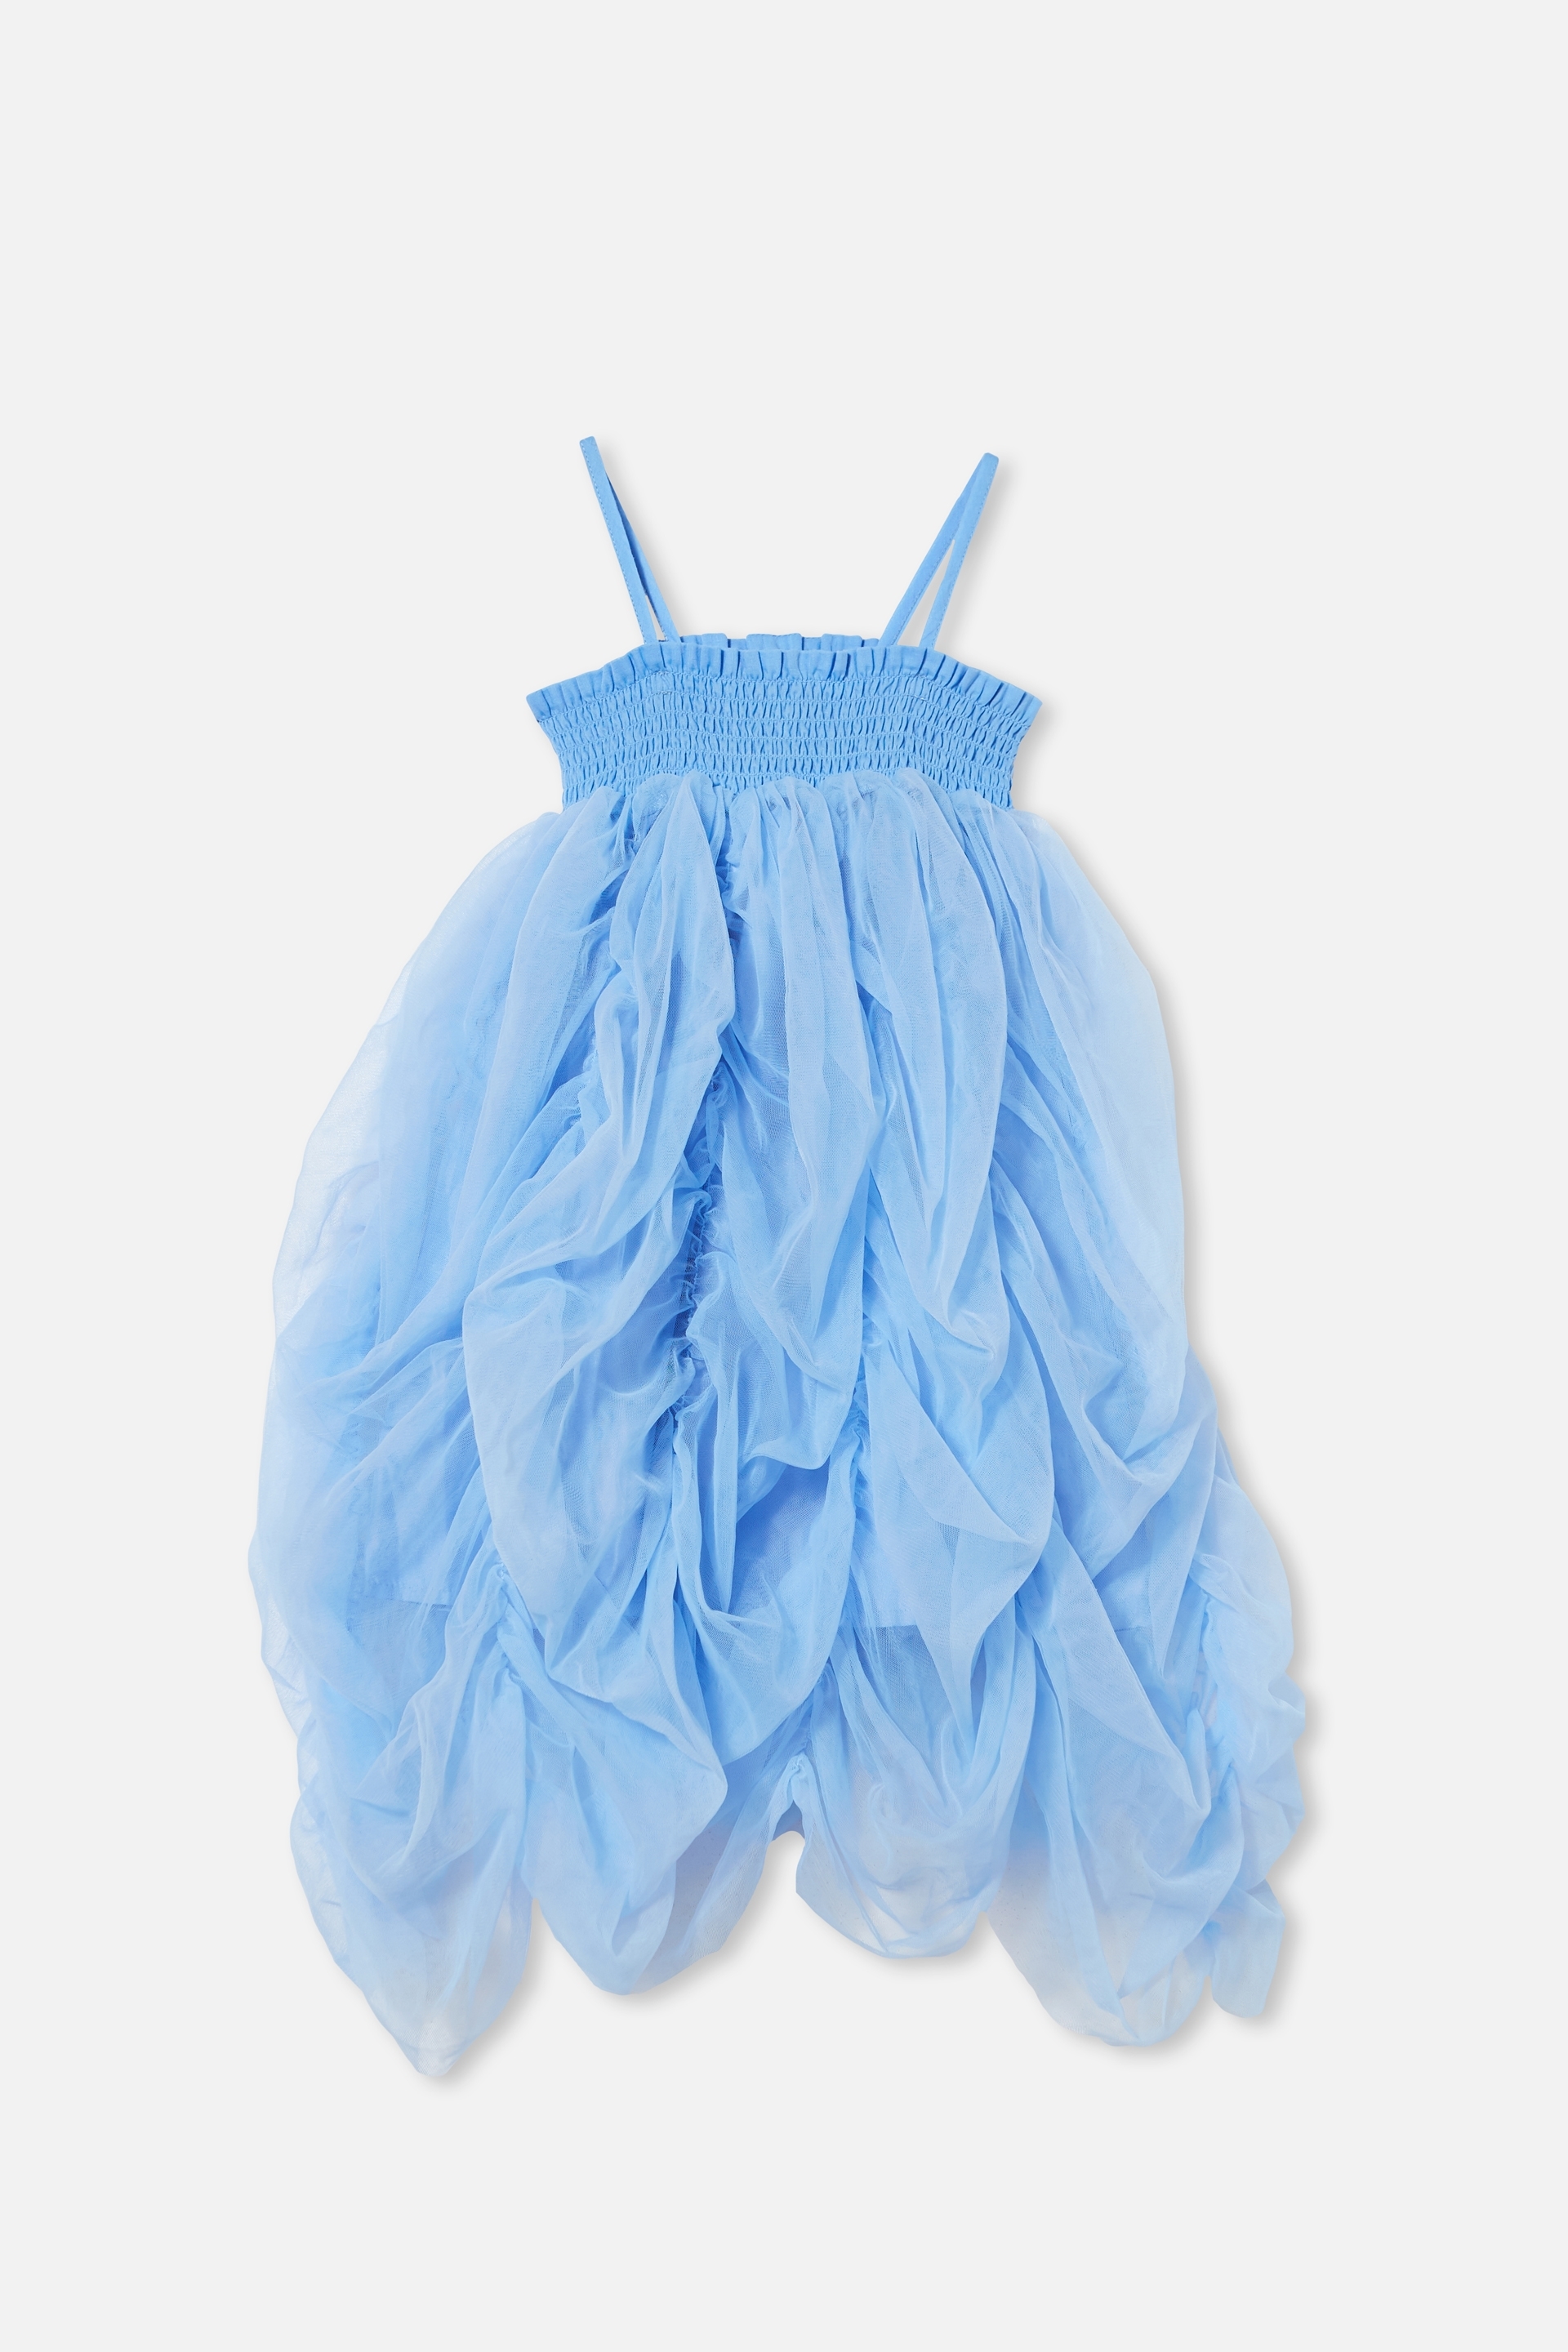 Cotton On Kids - Tilda Two-In-One Dress Up - Dusk blue